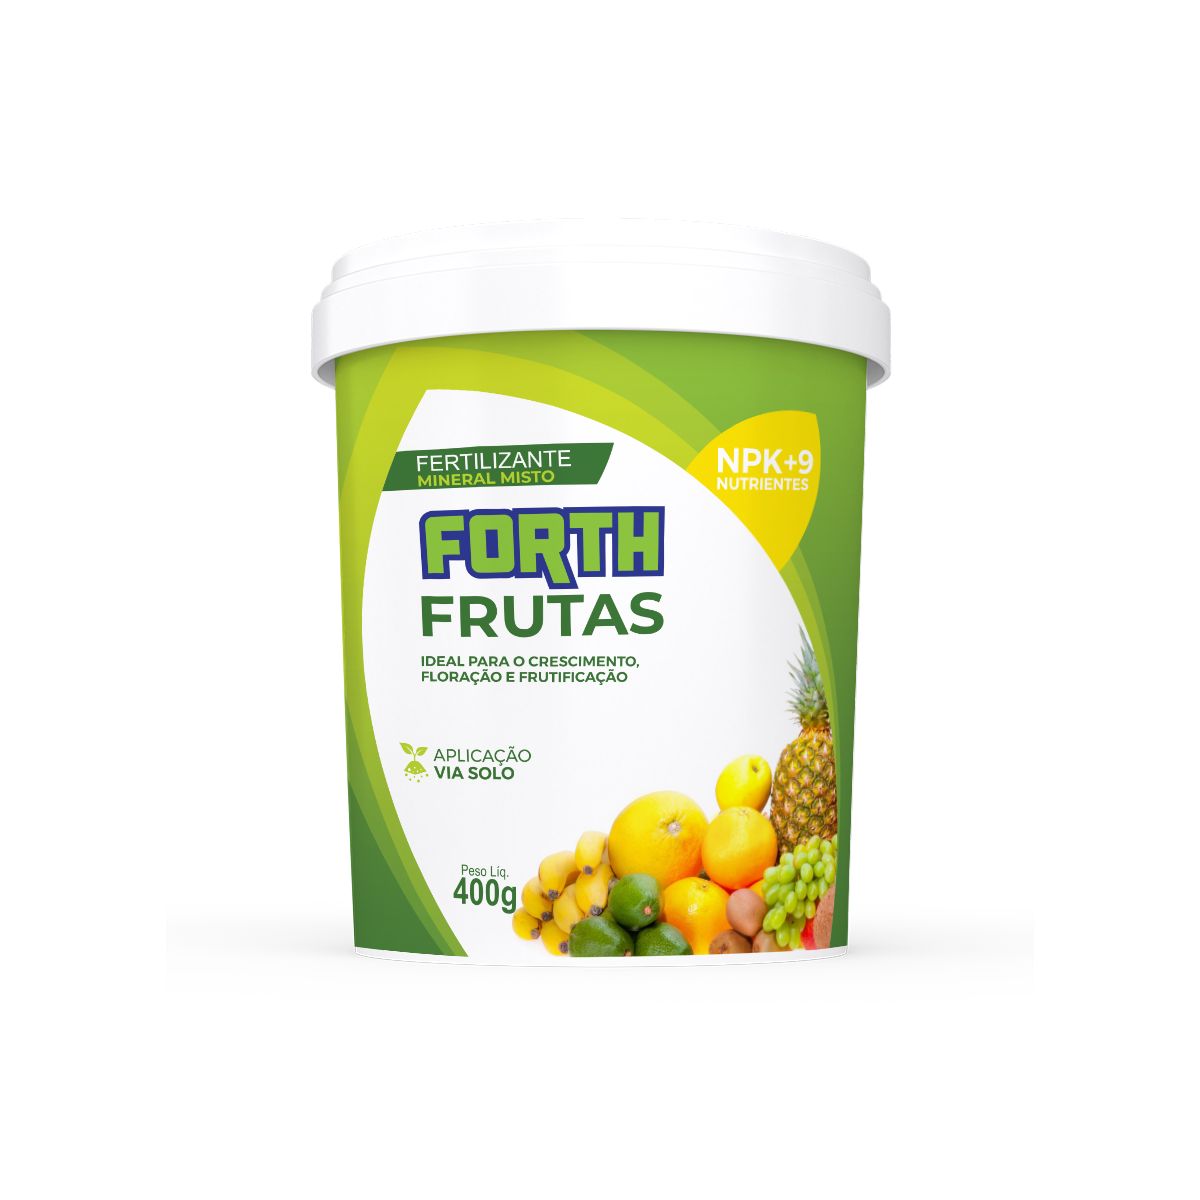 Fertilizante Mineral Forth Frutas NPK+ 9 Nutrientes 400g